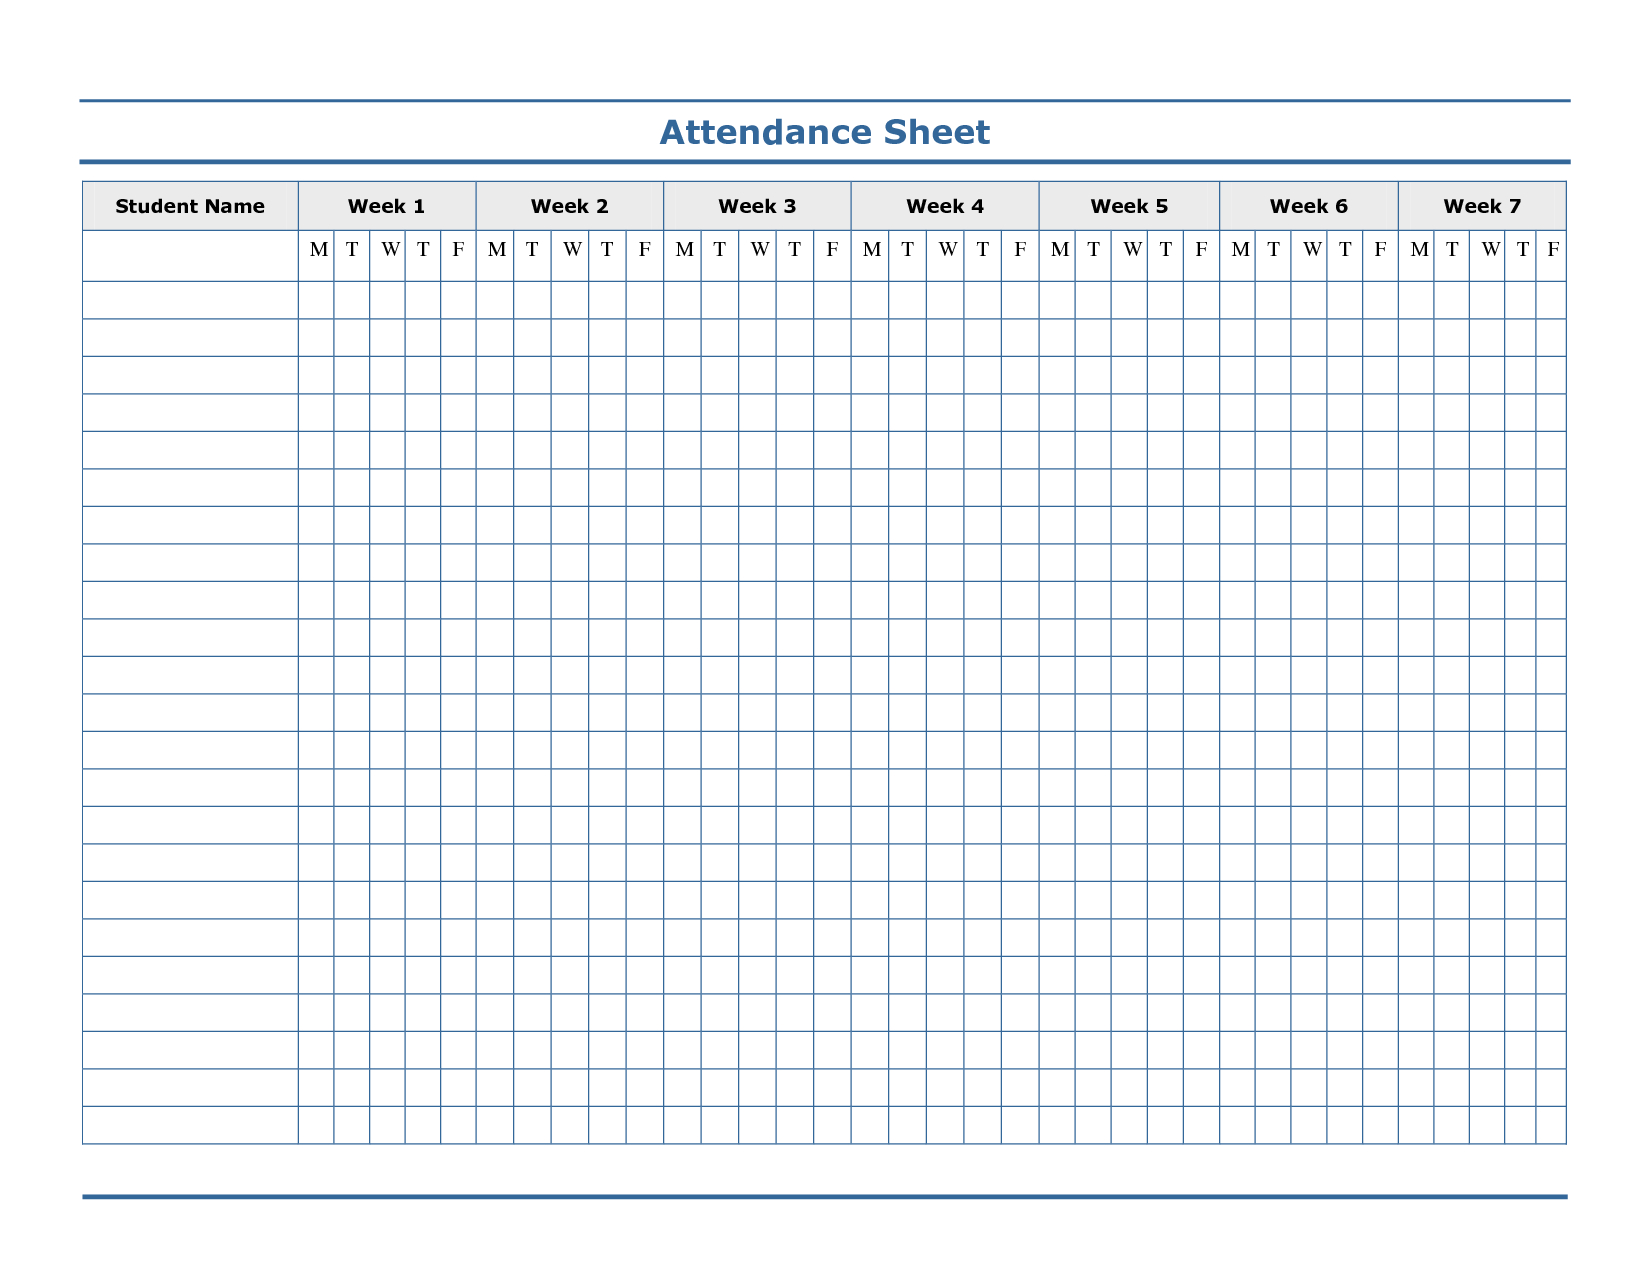 Spreadsheet Attendance Template Inside Employee Attendance Tracking Spreadsheet Template Free Google